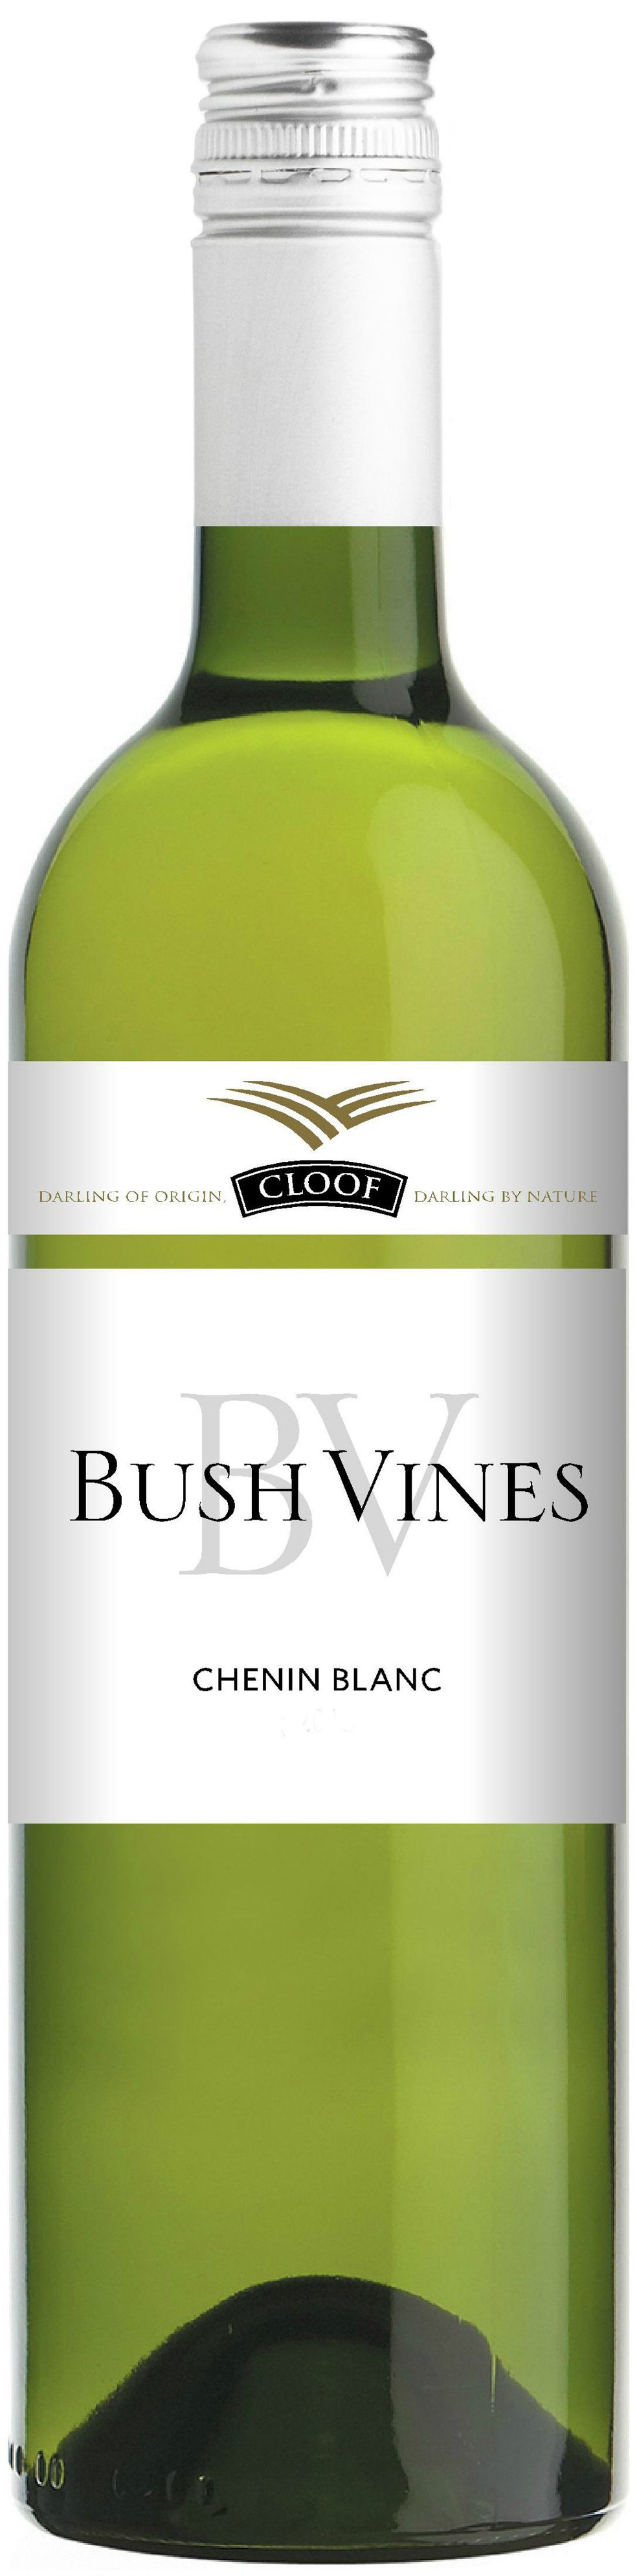 Cloof, Bush Vines Chenin Blanc, 2016